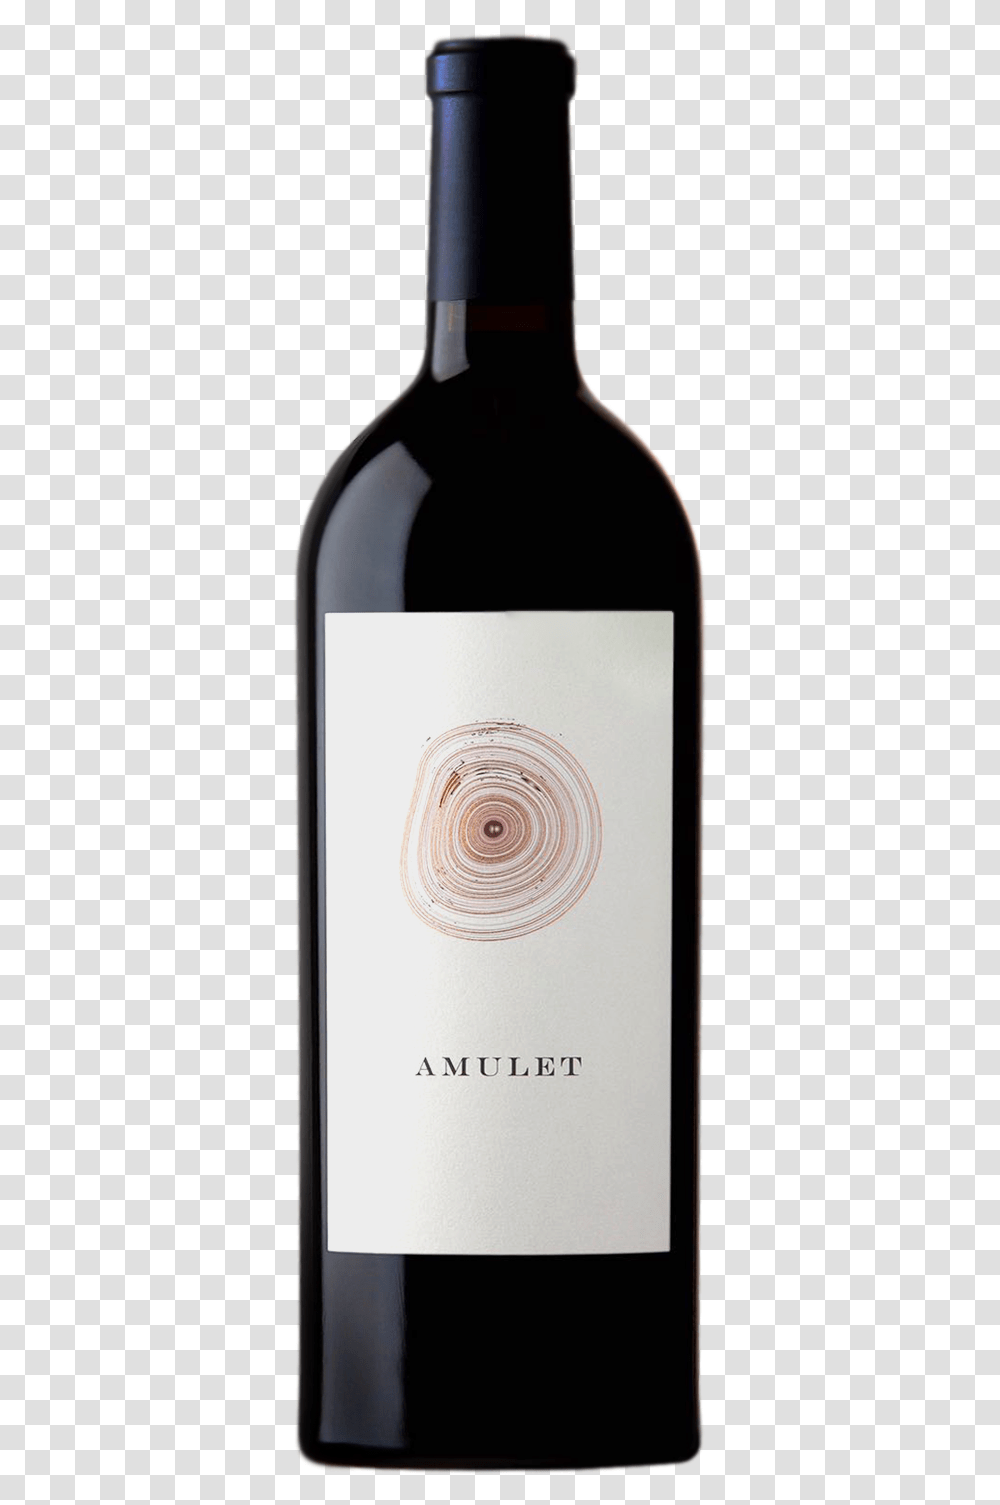 Amulet Bottle ShotSrc Https Montecillo Rioja Crianza 2015, Mobile Phone, Electronics, Cell Phone, Home Decor Transparent Png